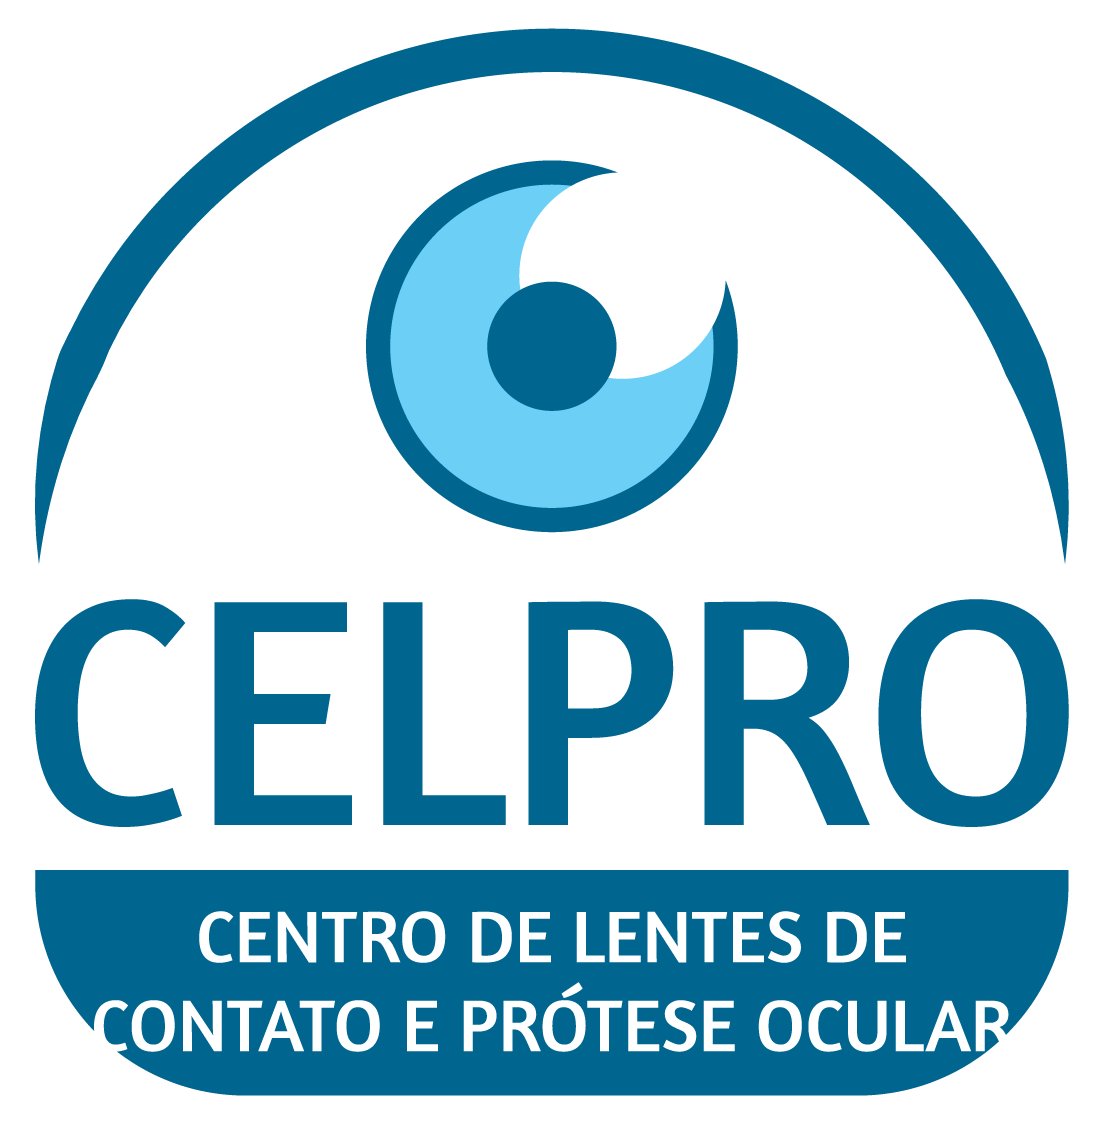 (c) Centrocelpro.com.br